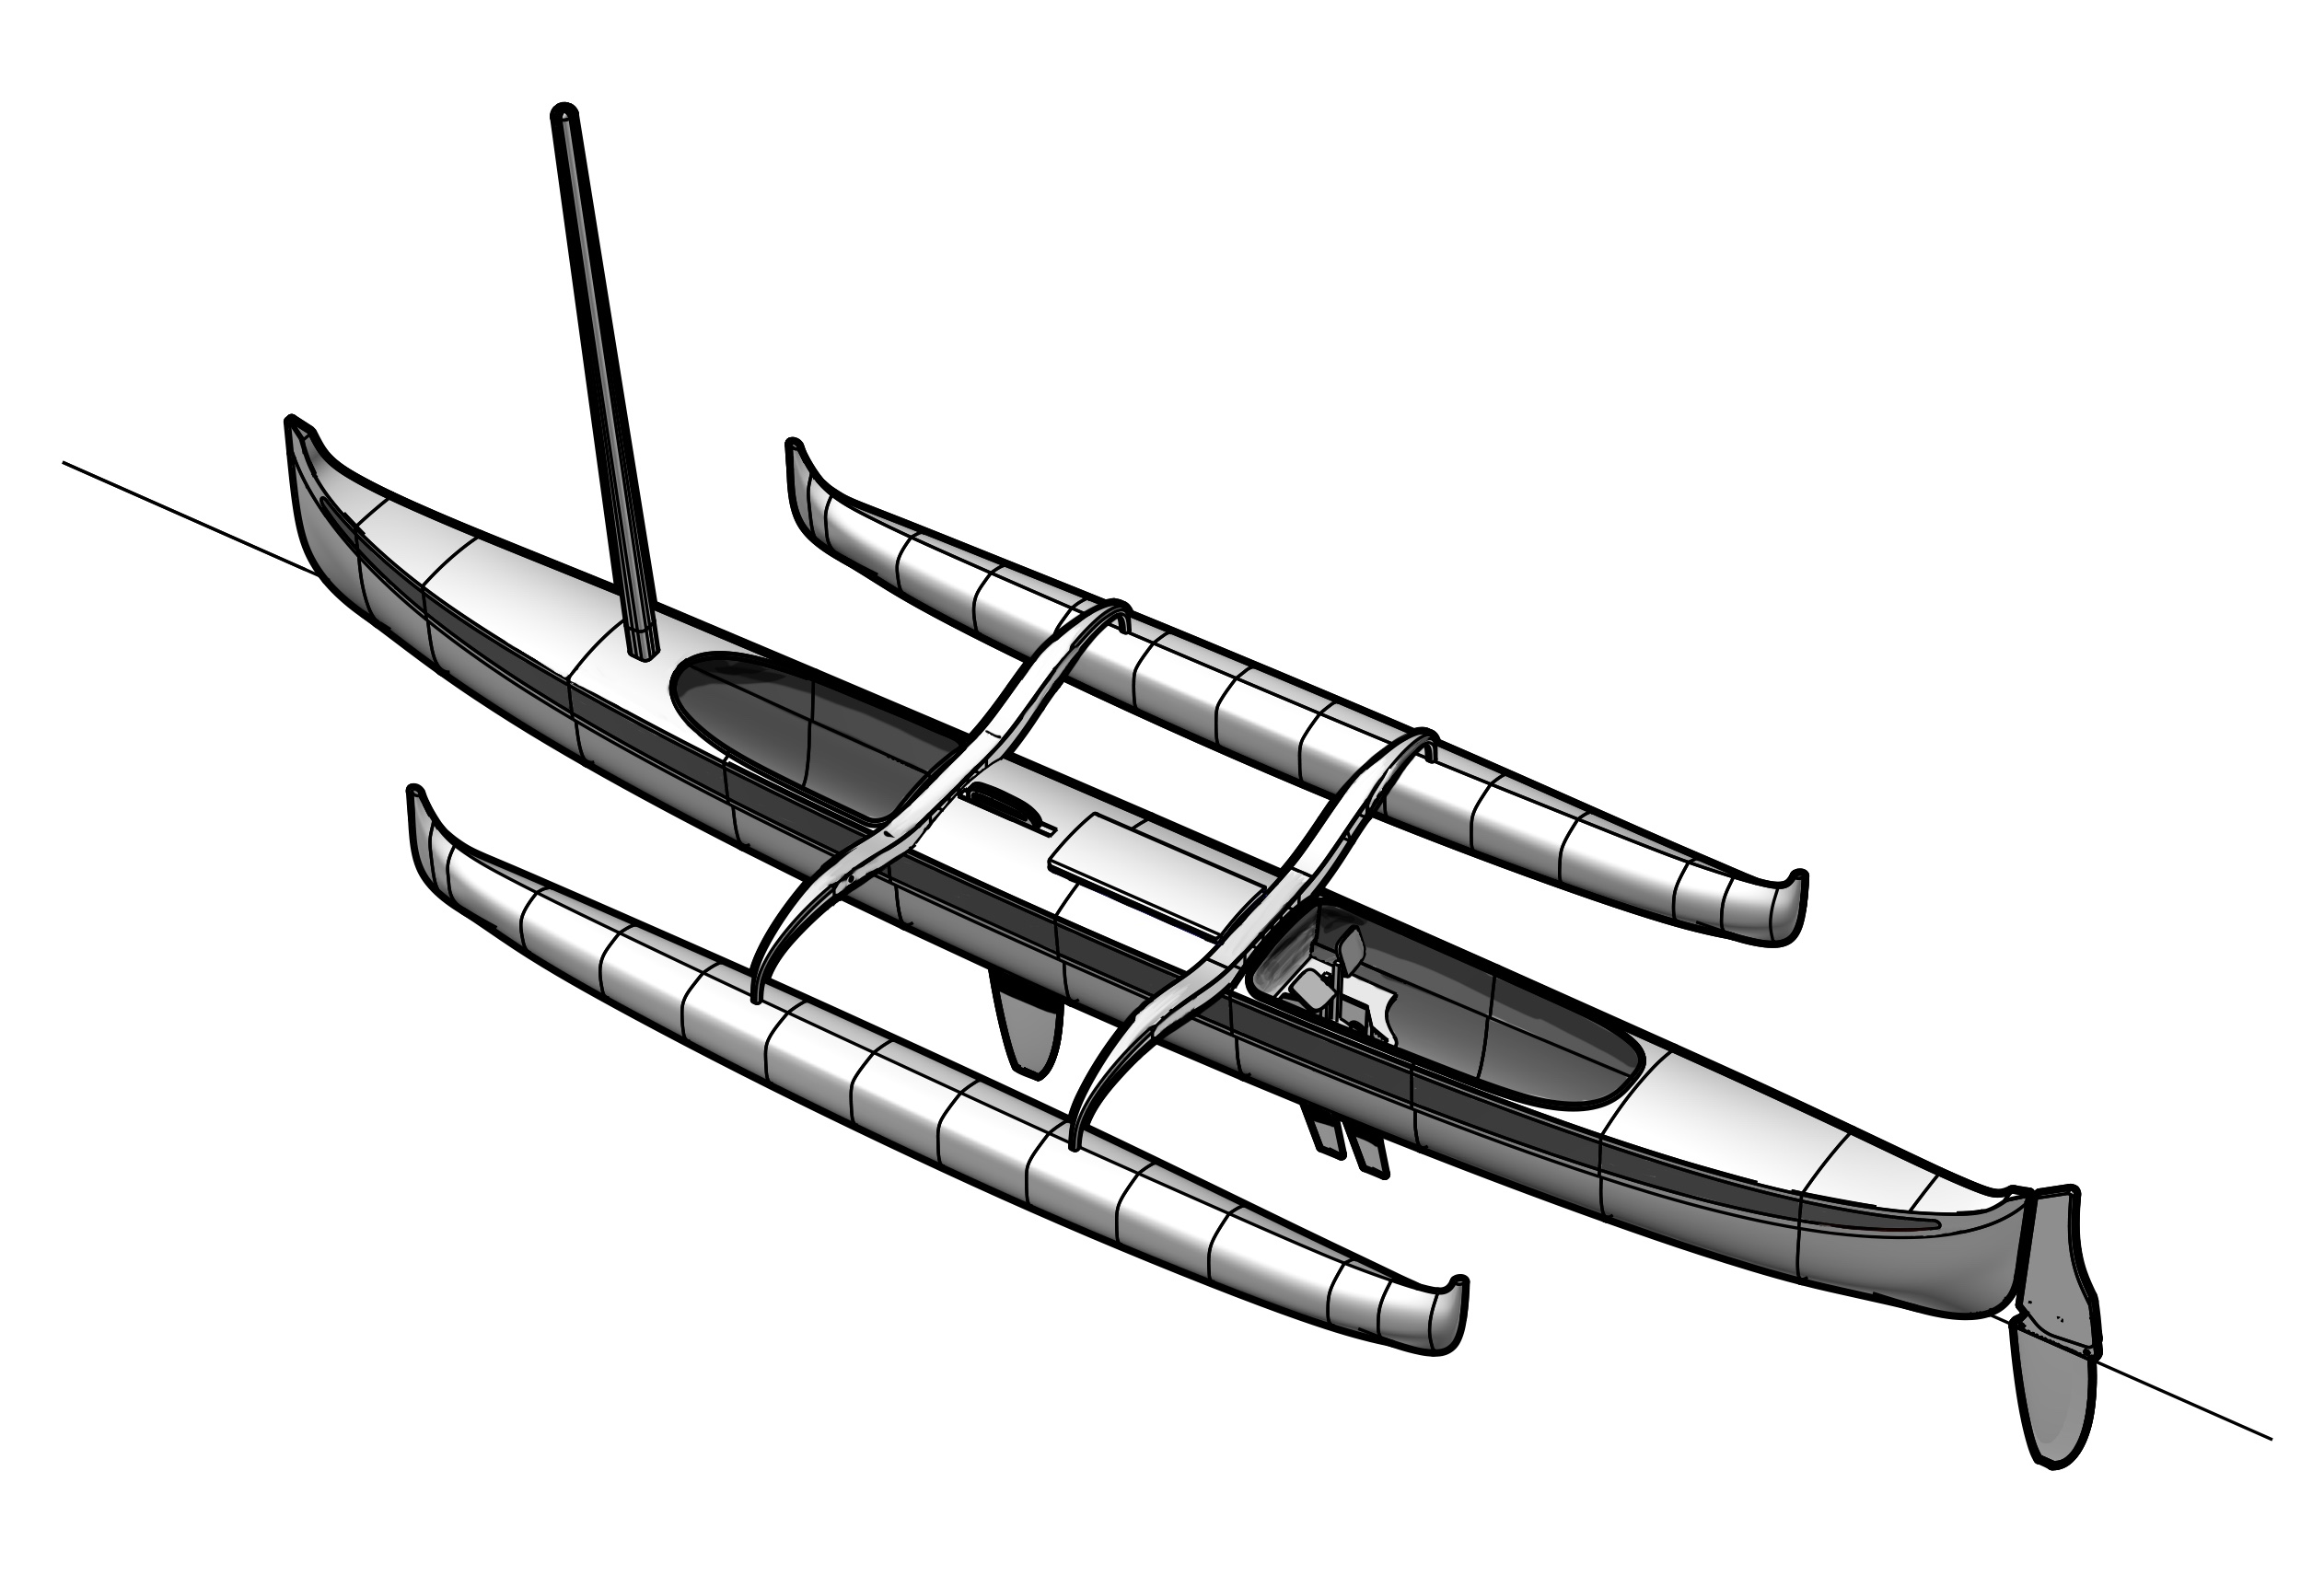 Talulah Sailing Outrigger, a Lightweight Trimaran You Can Build by CLC